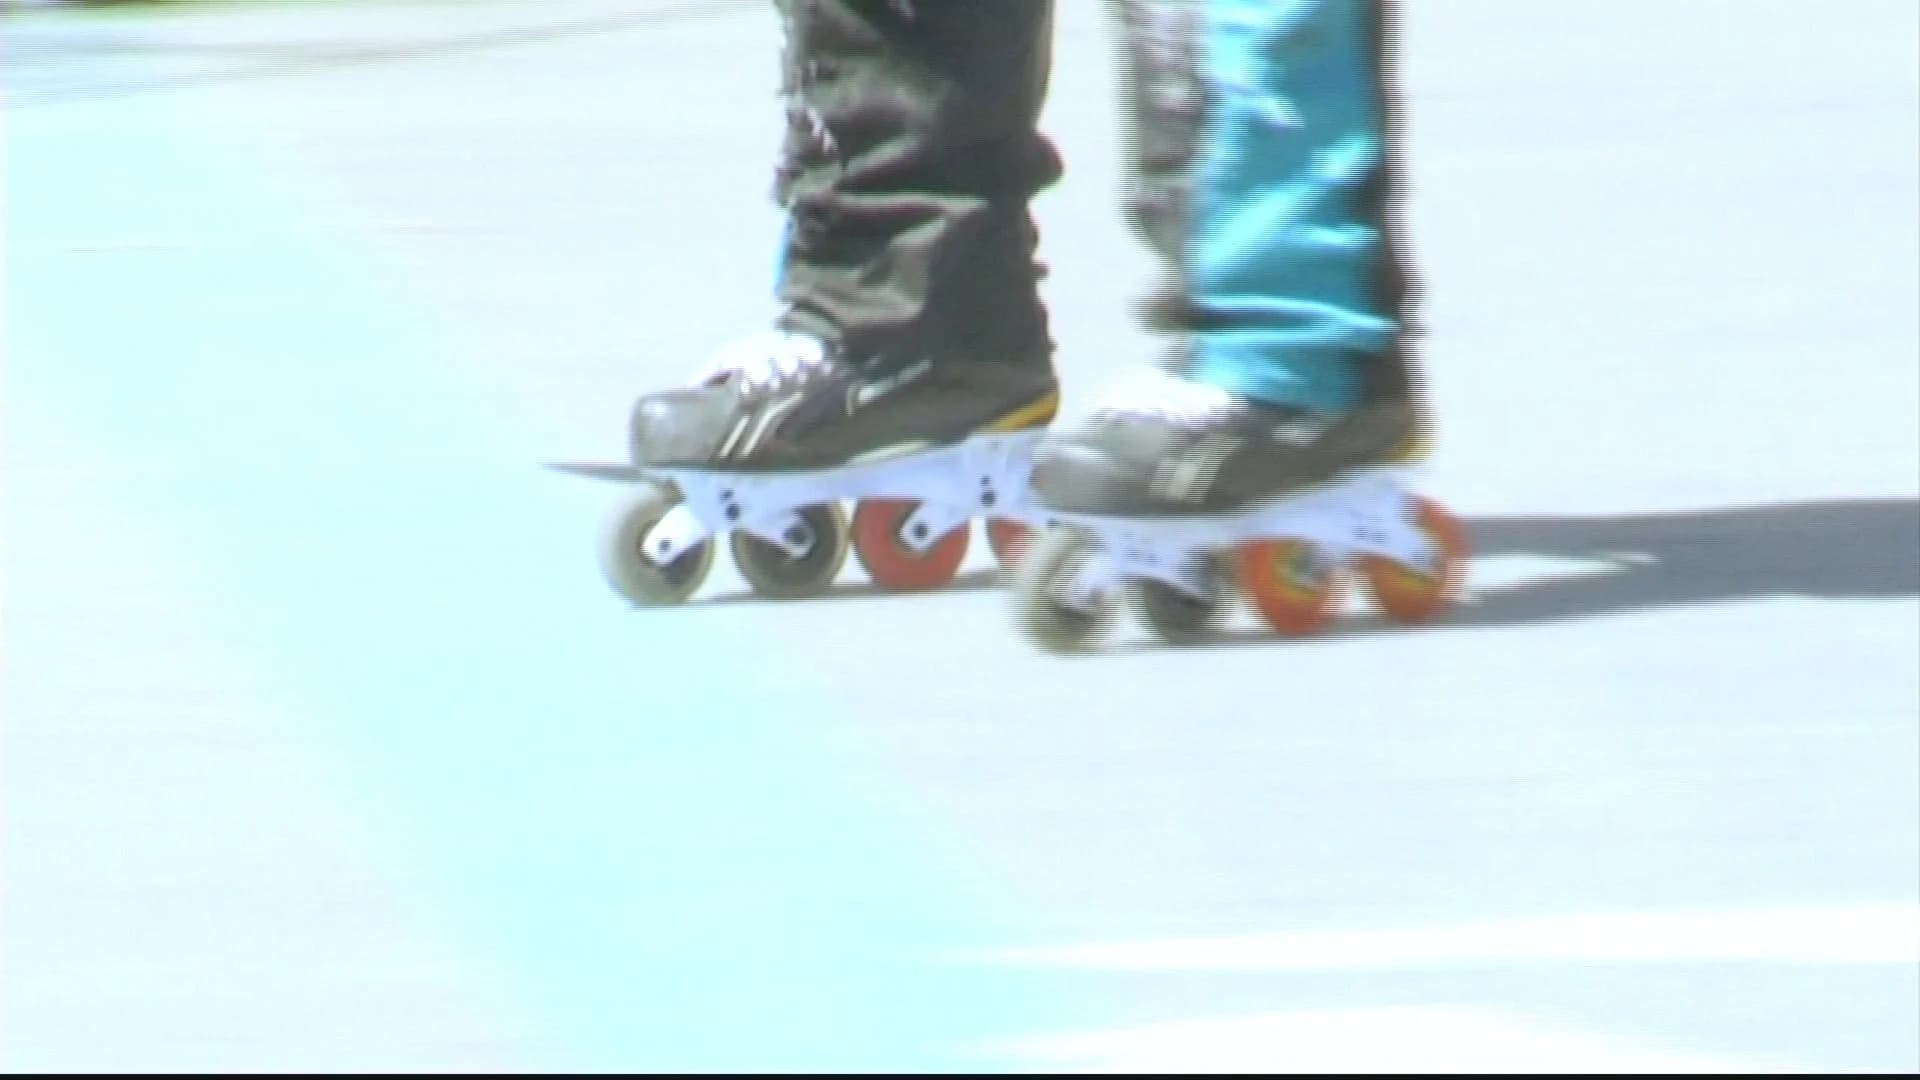 Borough Park roller skating rink set to close